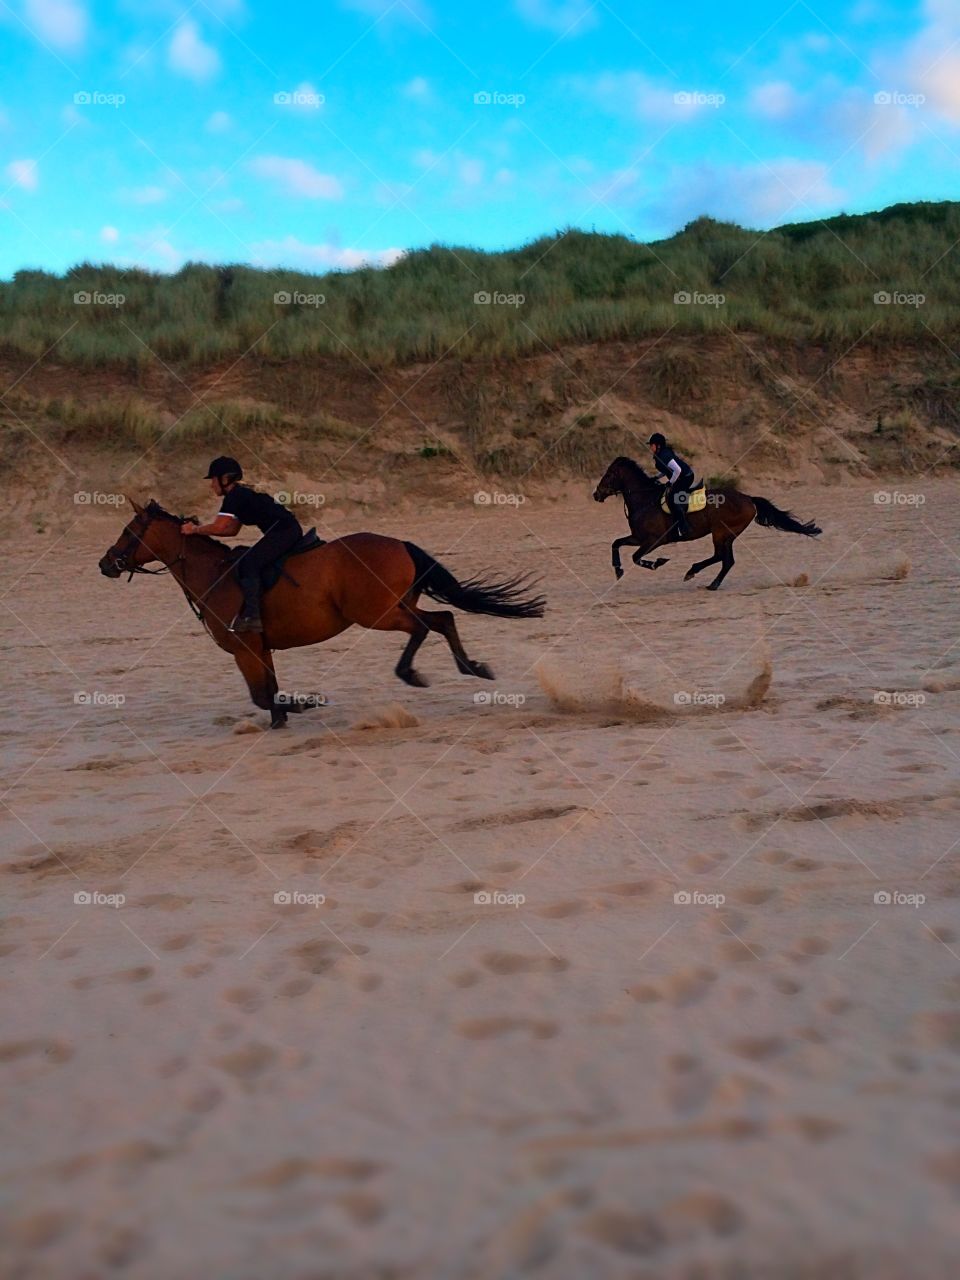 Horses at the Beach. Horses galloping at the beach 